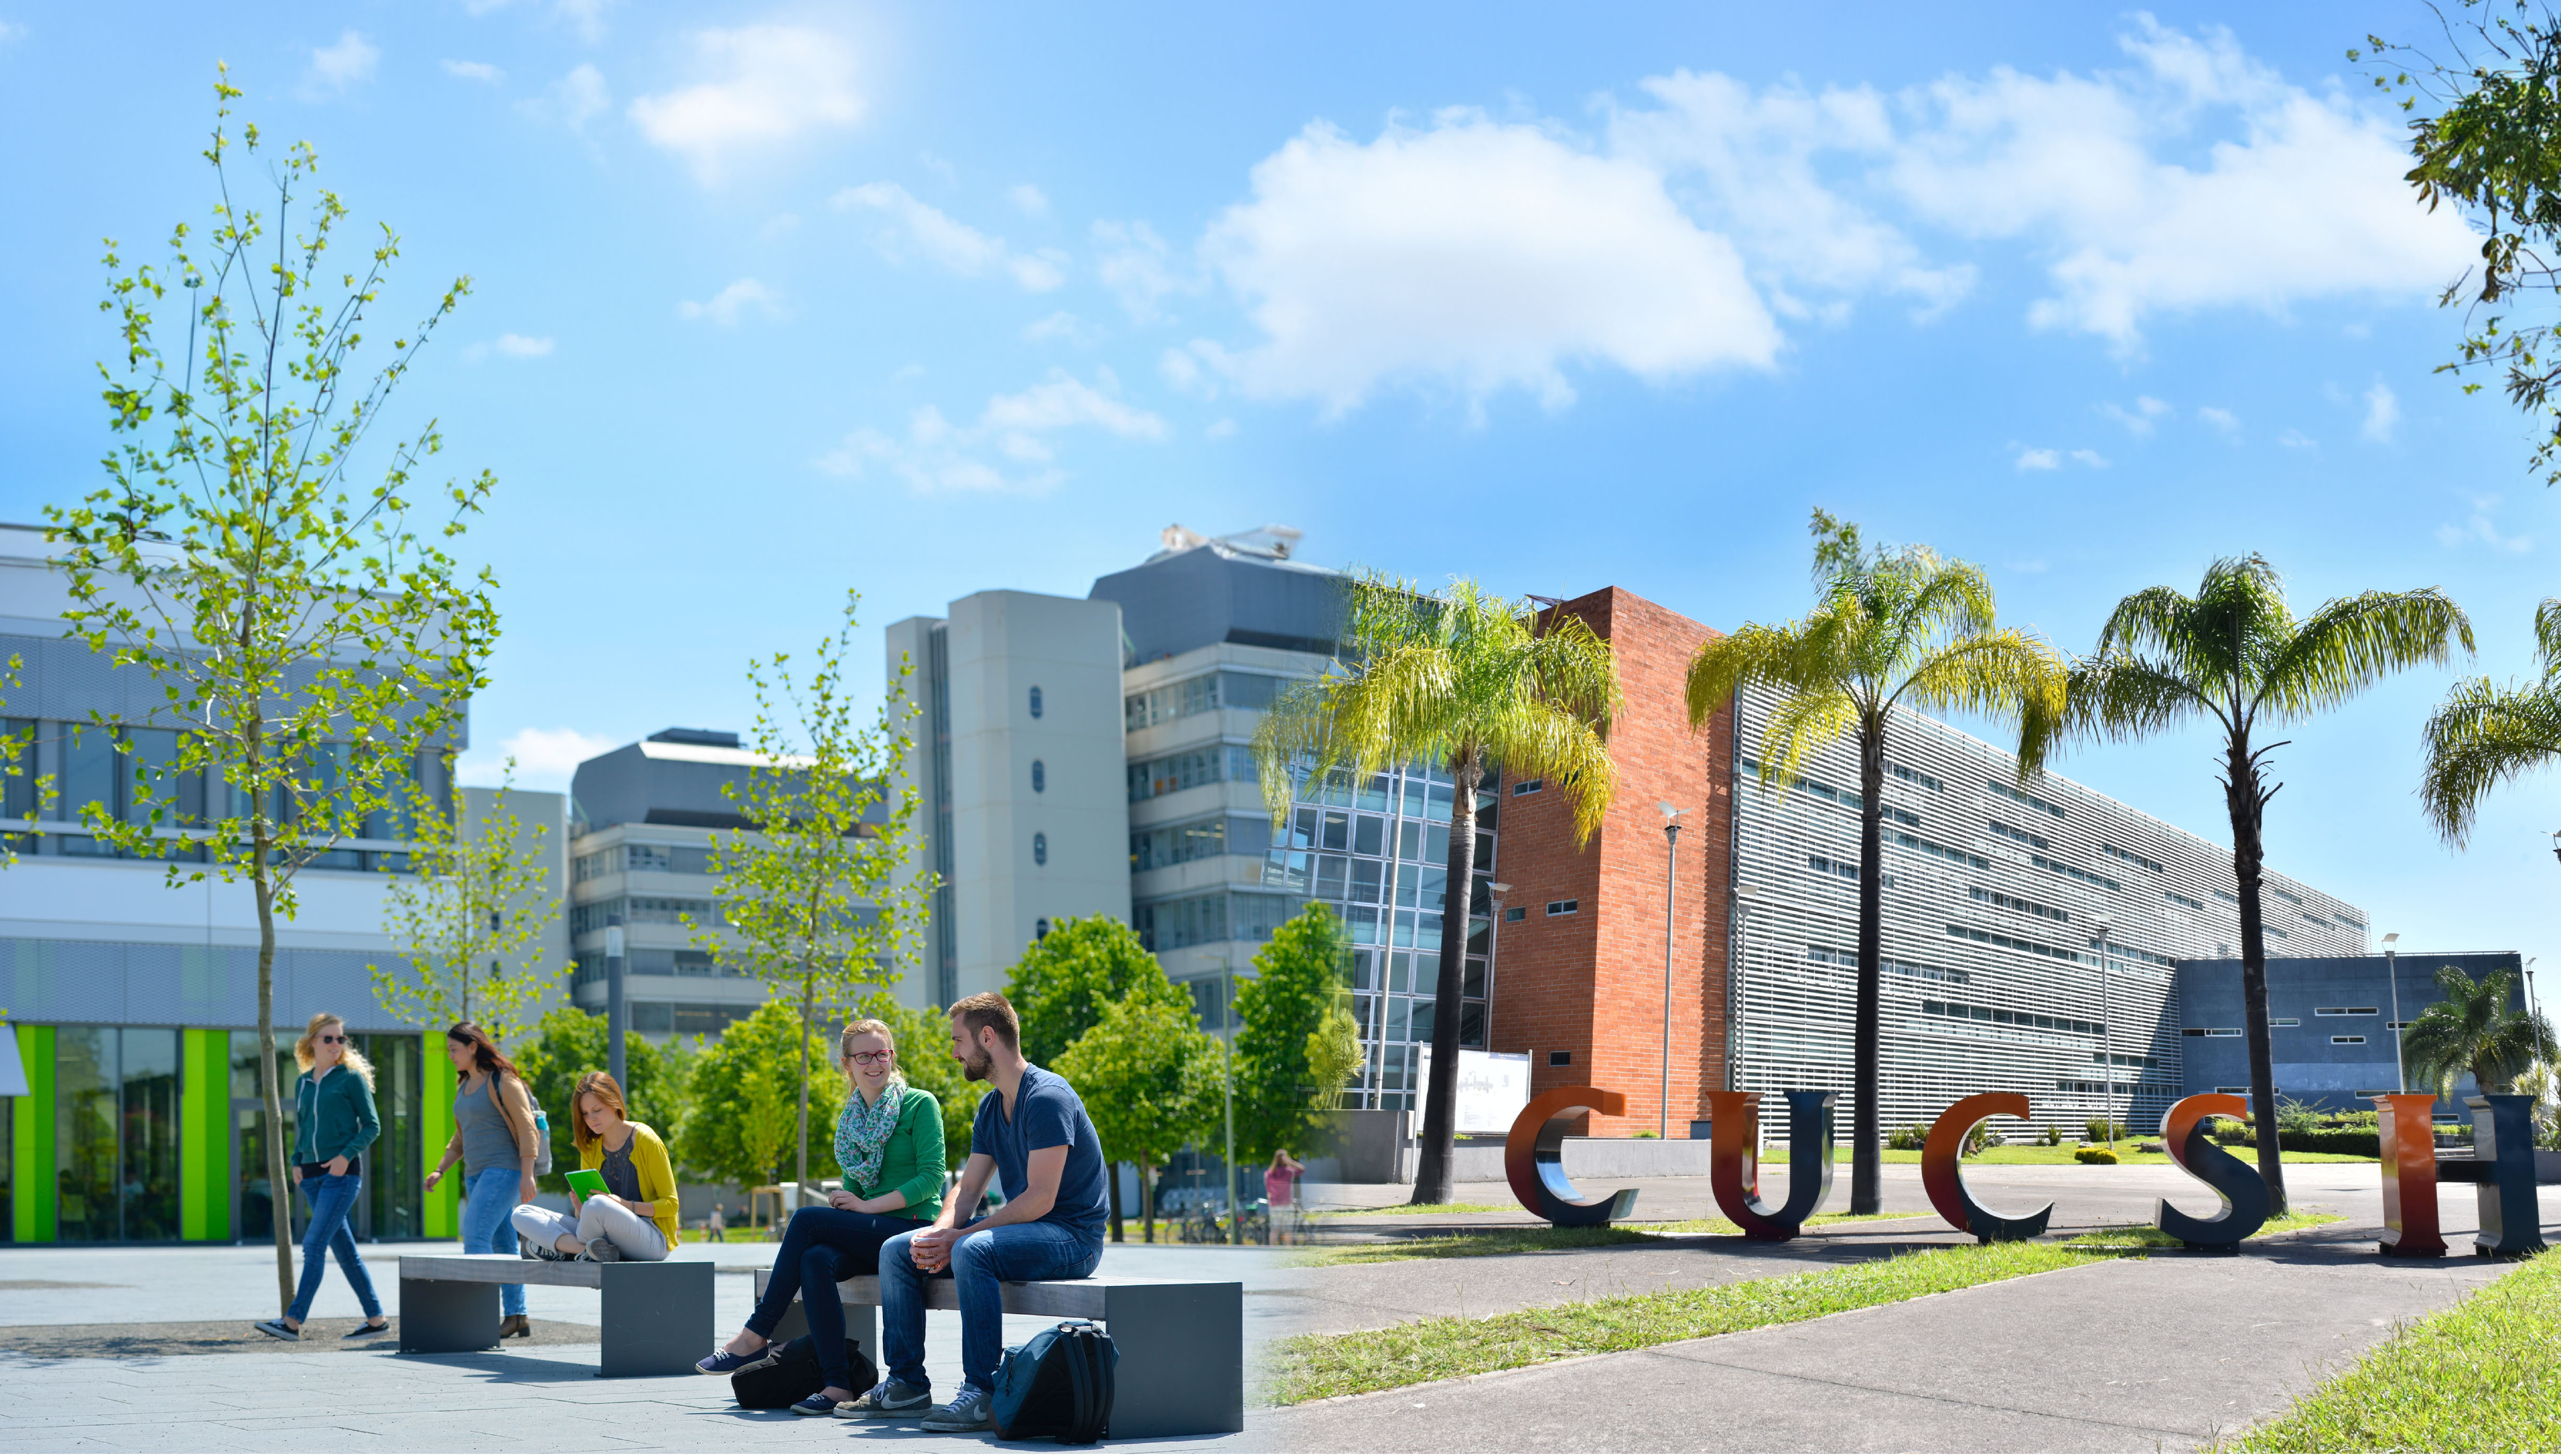 Image montage of the universities of Bielefeld and Guadalajara